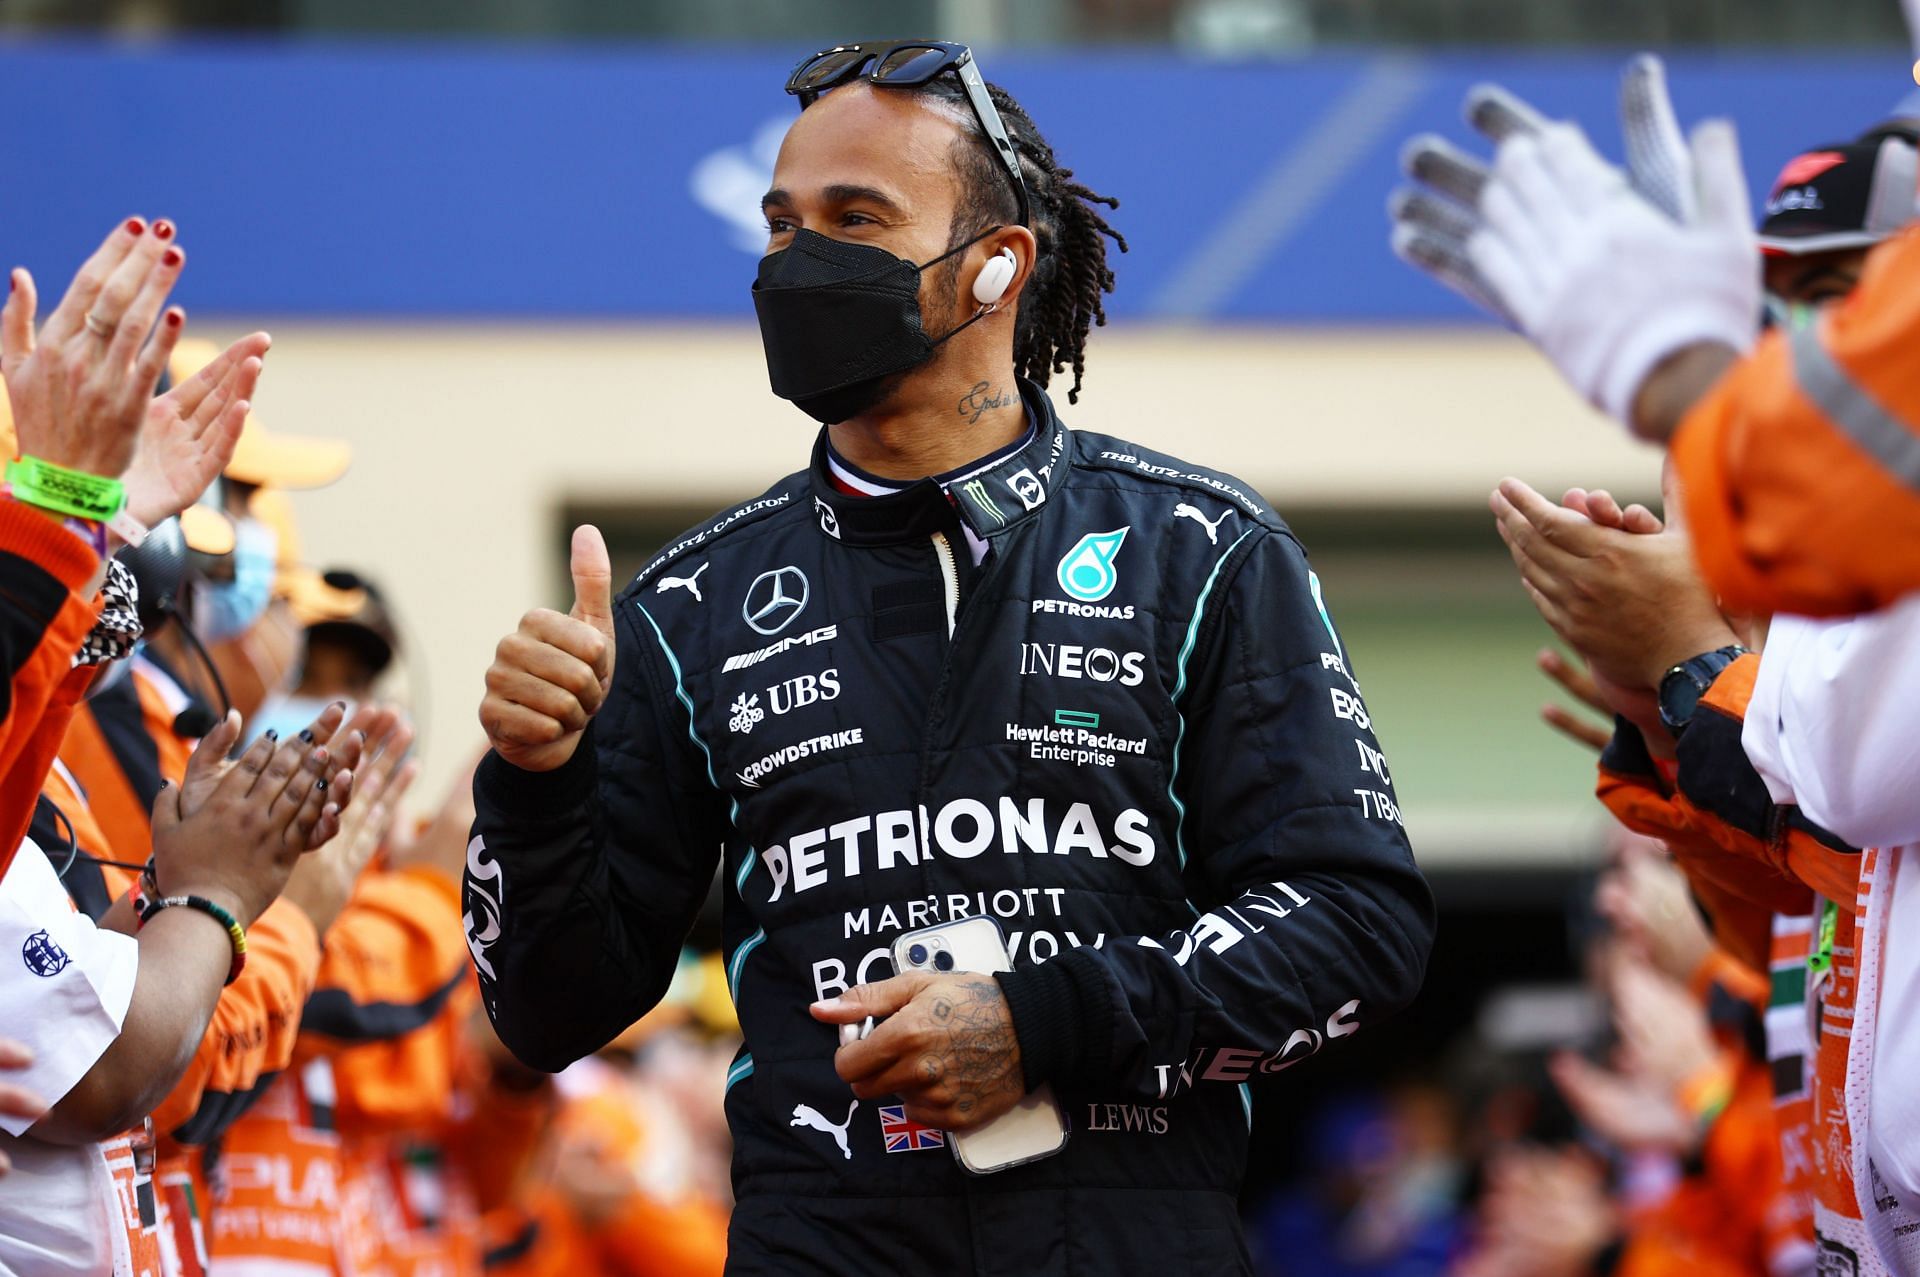 Lewis Hamilton at the F1 Grand Prix of Abu Dhabi